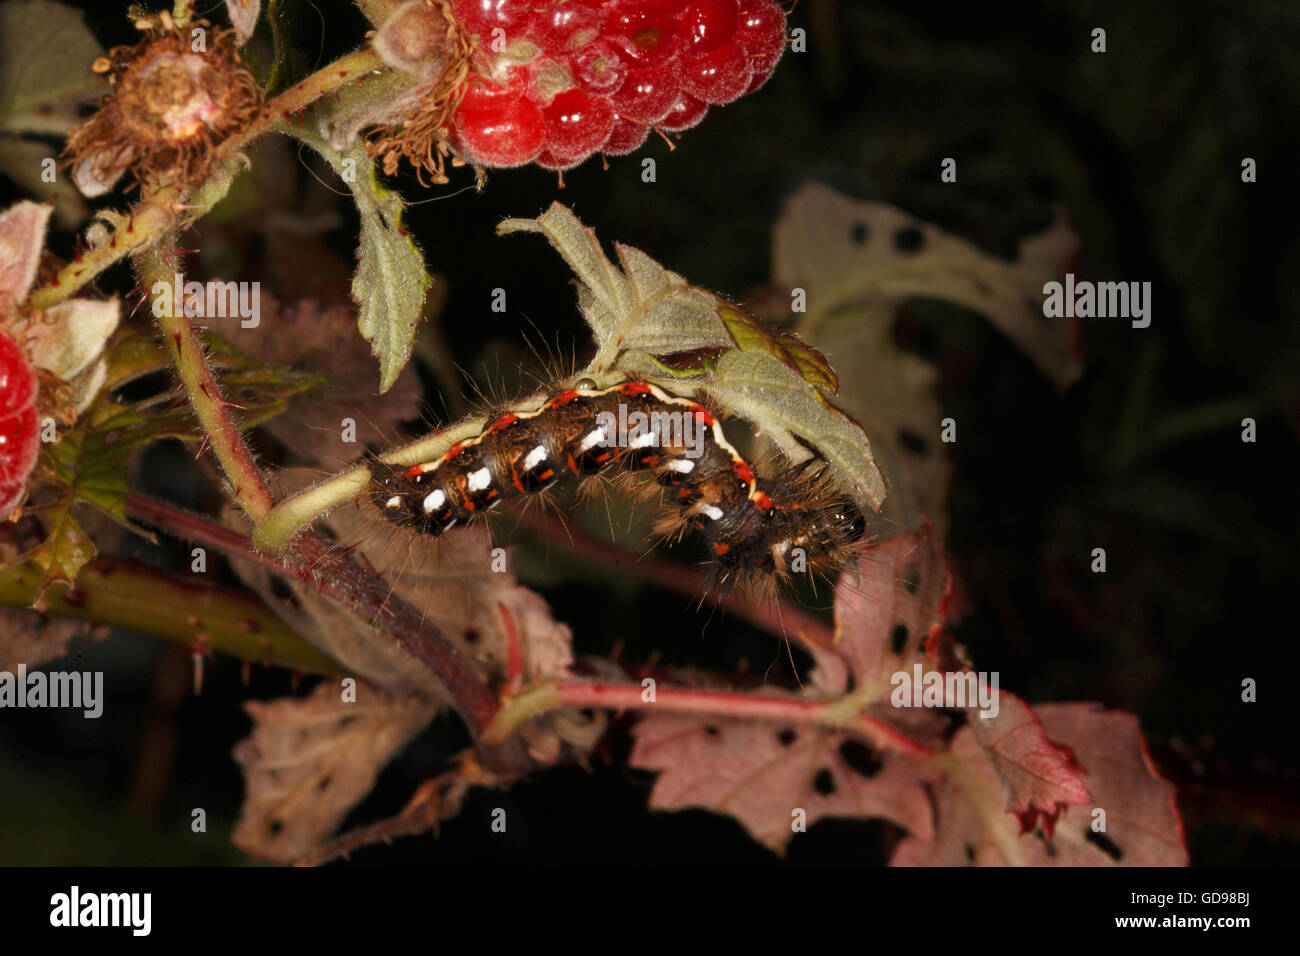 Knot grass moth (Acronicta rumicis) caterpillar on a leaf. Stock Photo